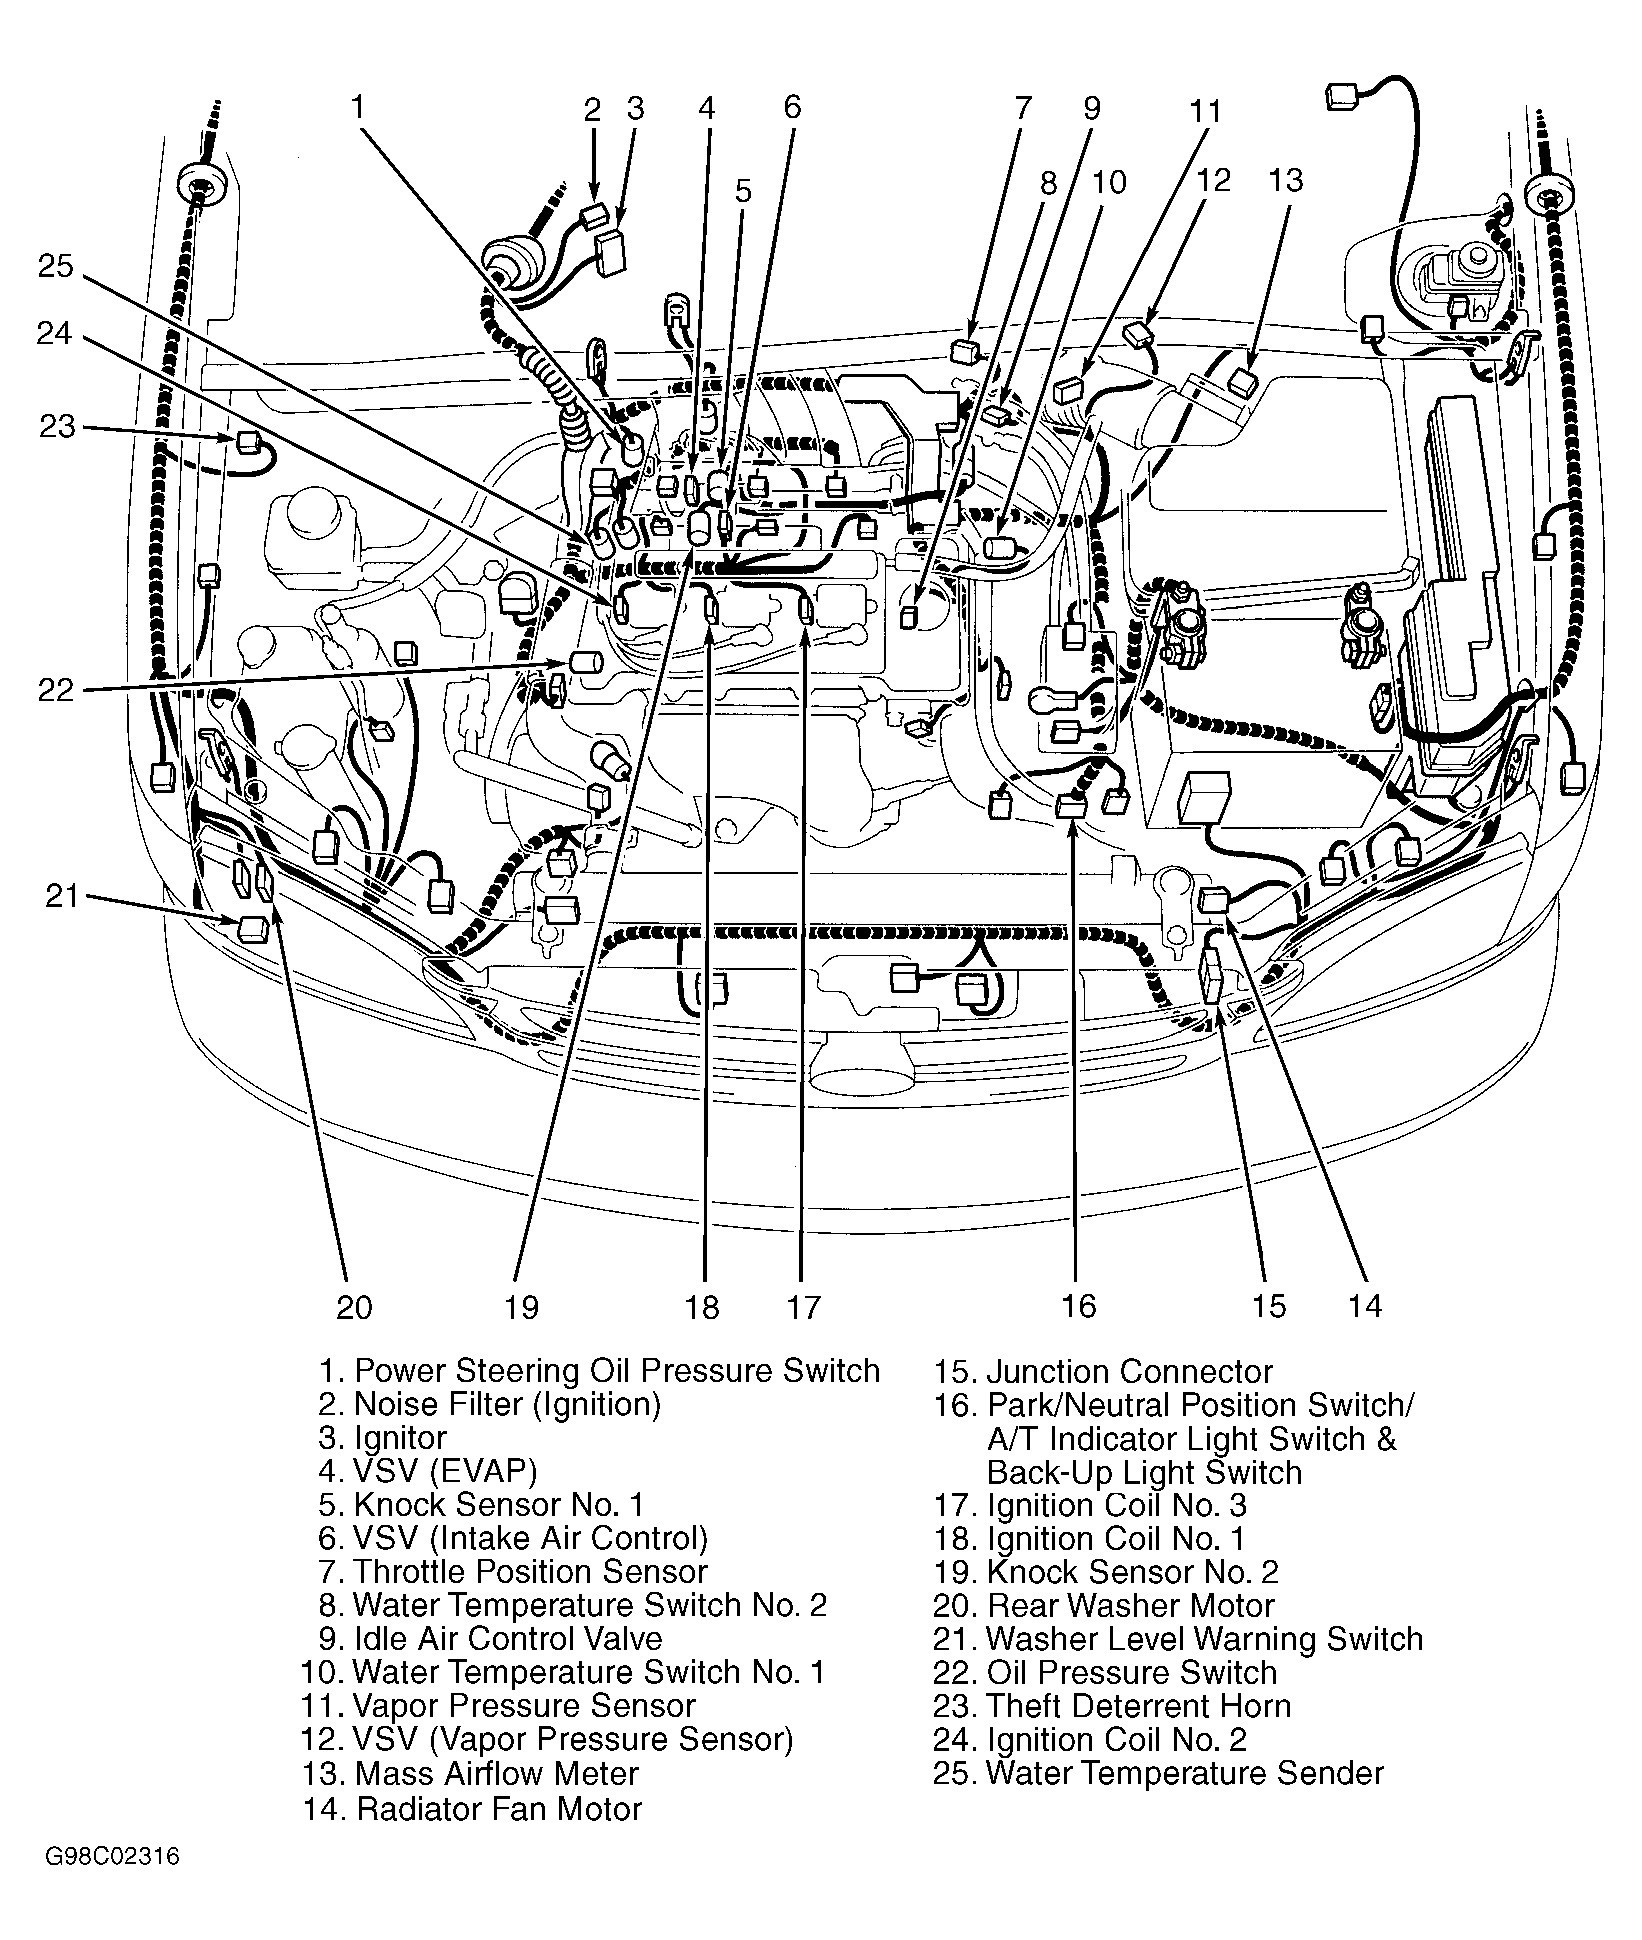 Toyota Camry Engine Diagram toyota Camry Engine Parts Diagram Spy Shots – All Cadillac Auto Cars Of Toyota Camry Engine Diagram